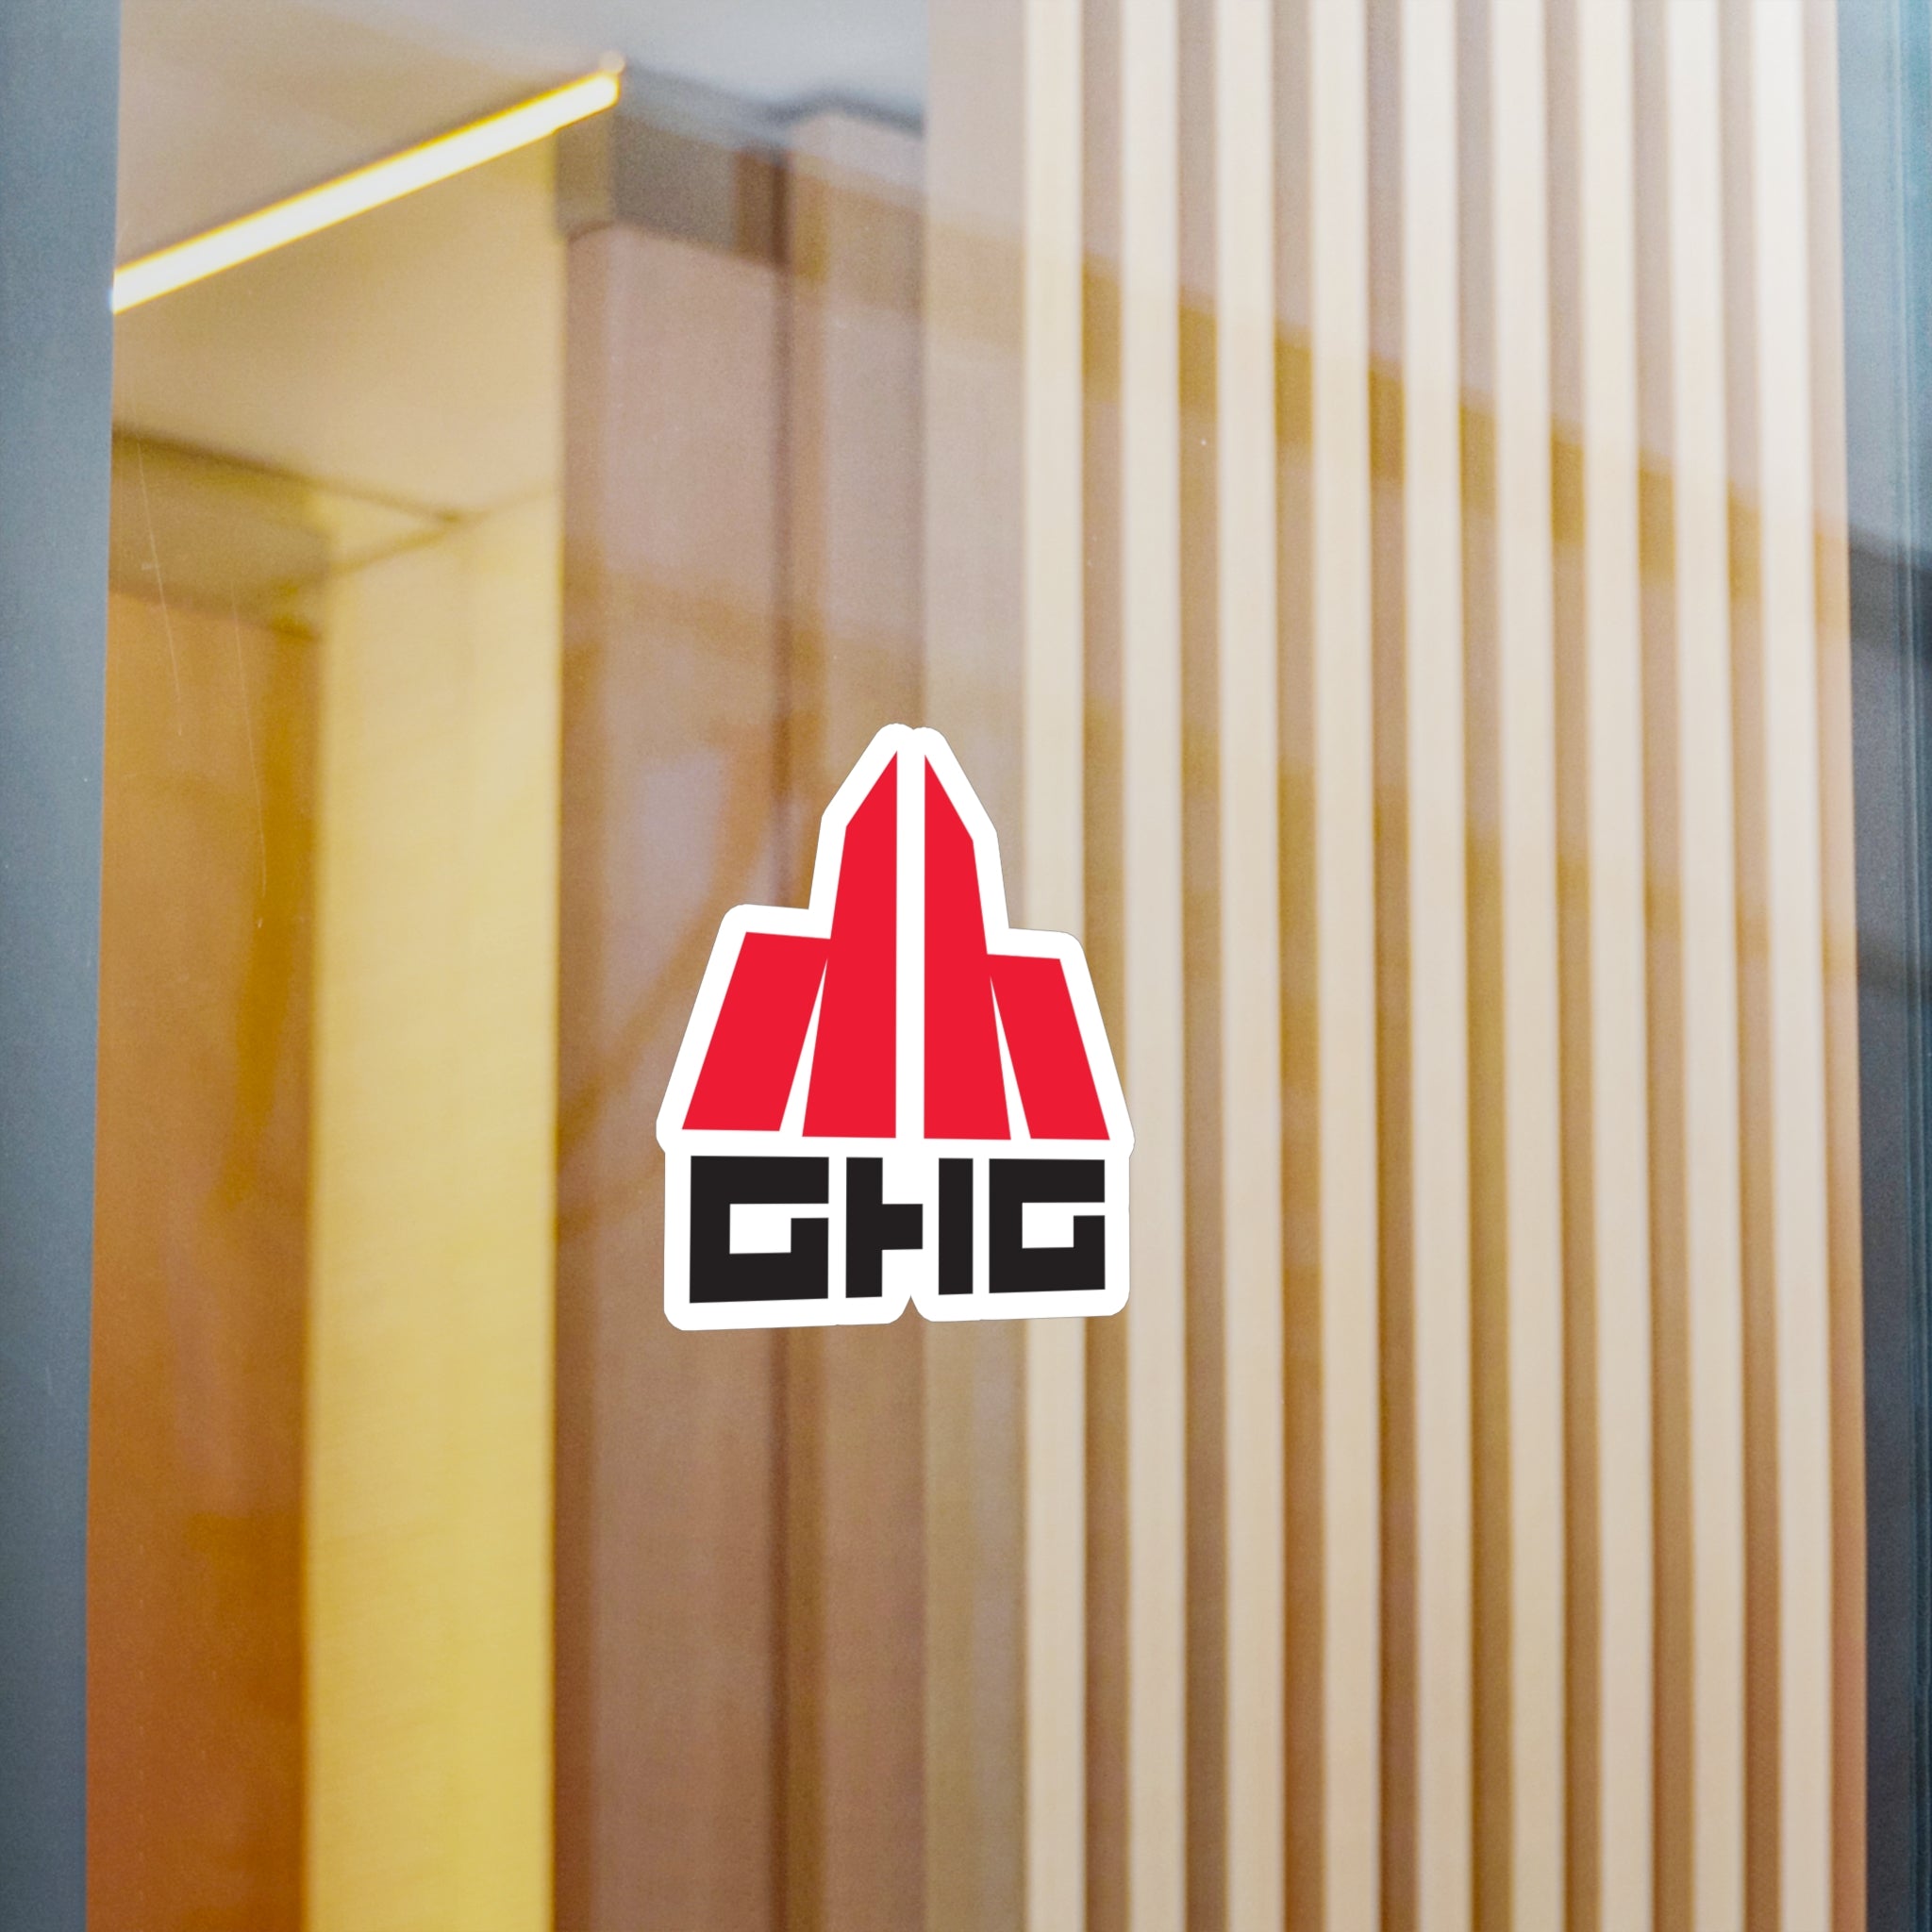 GHG Sticker